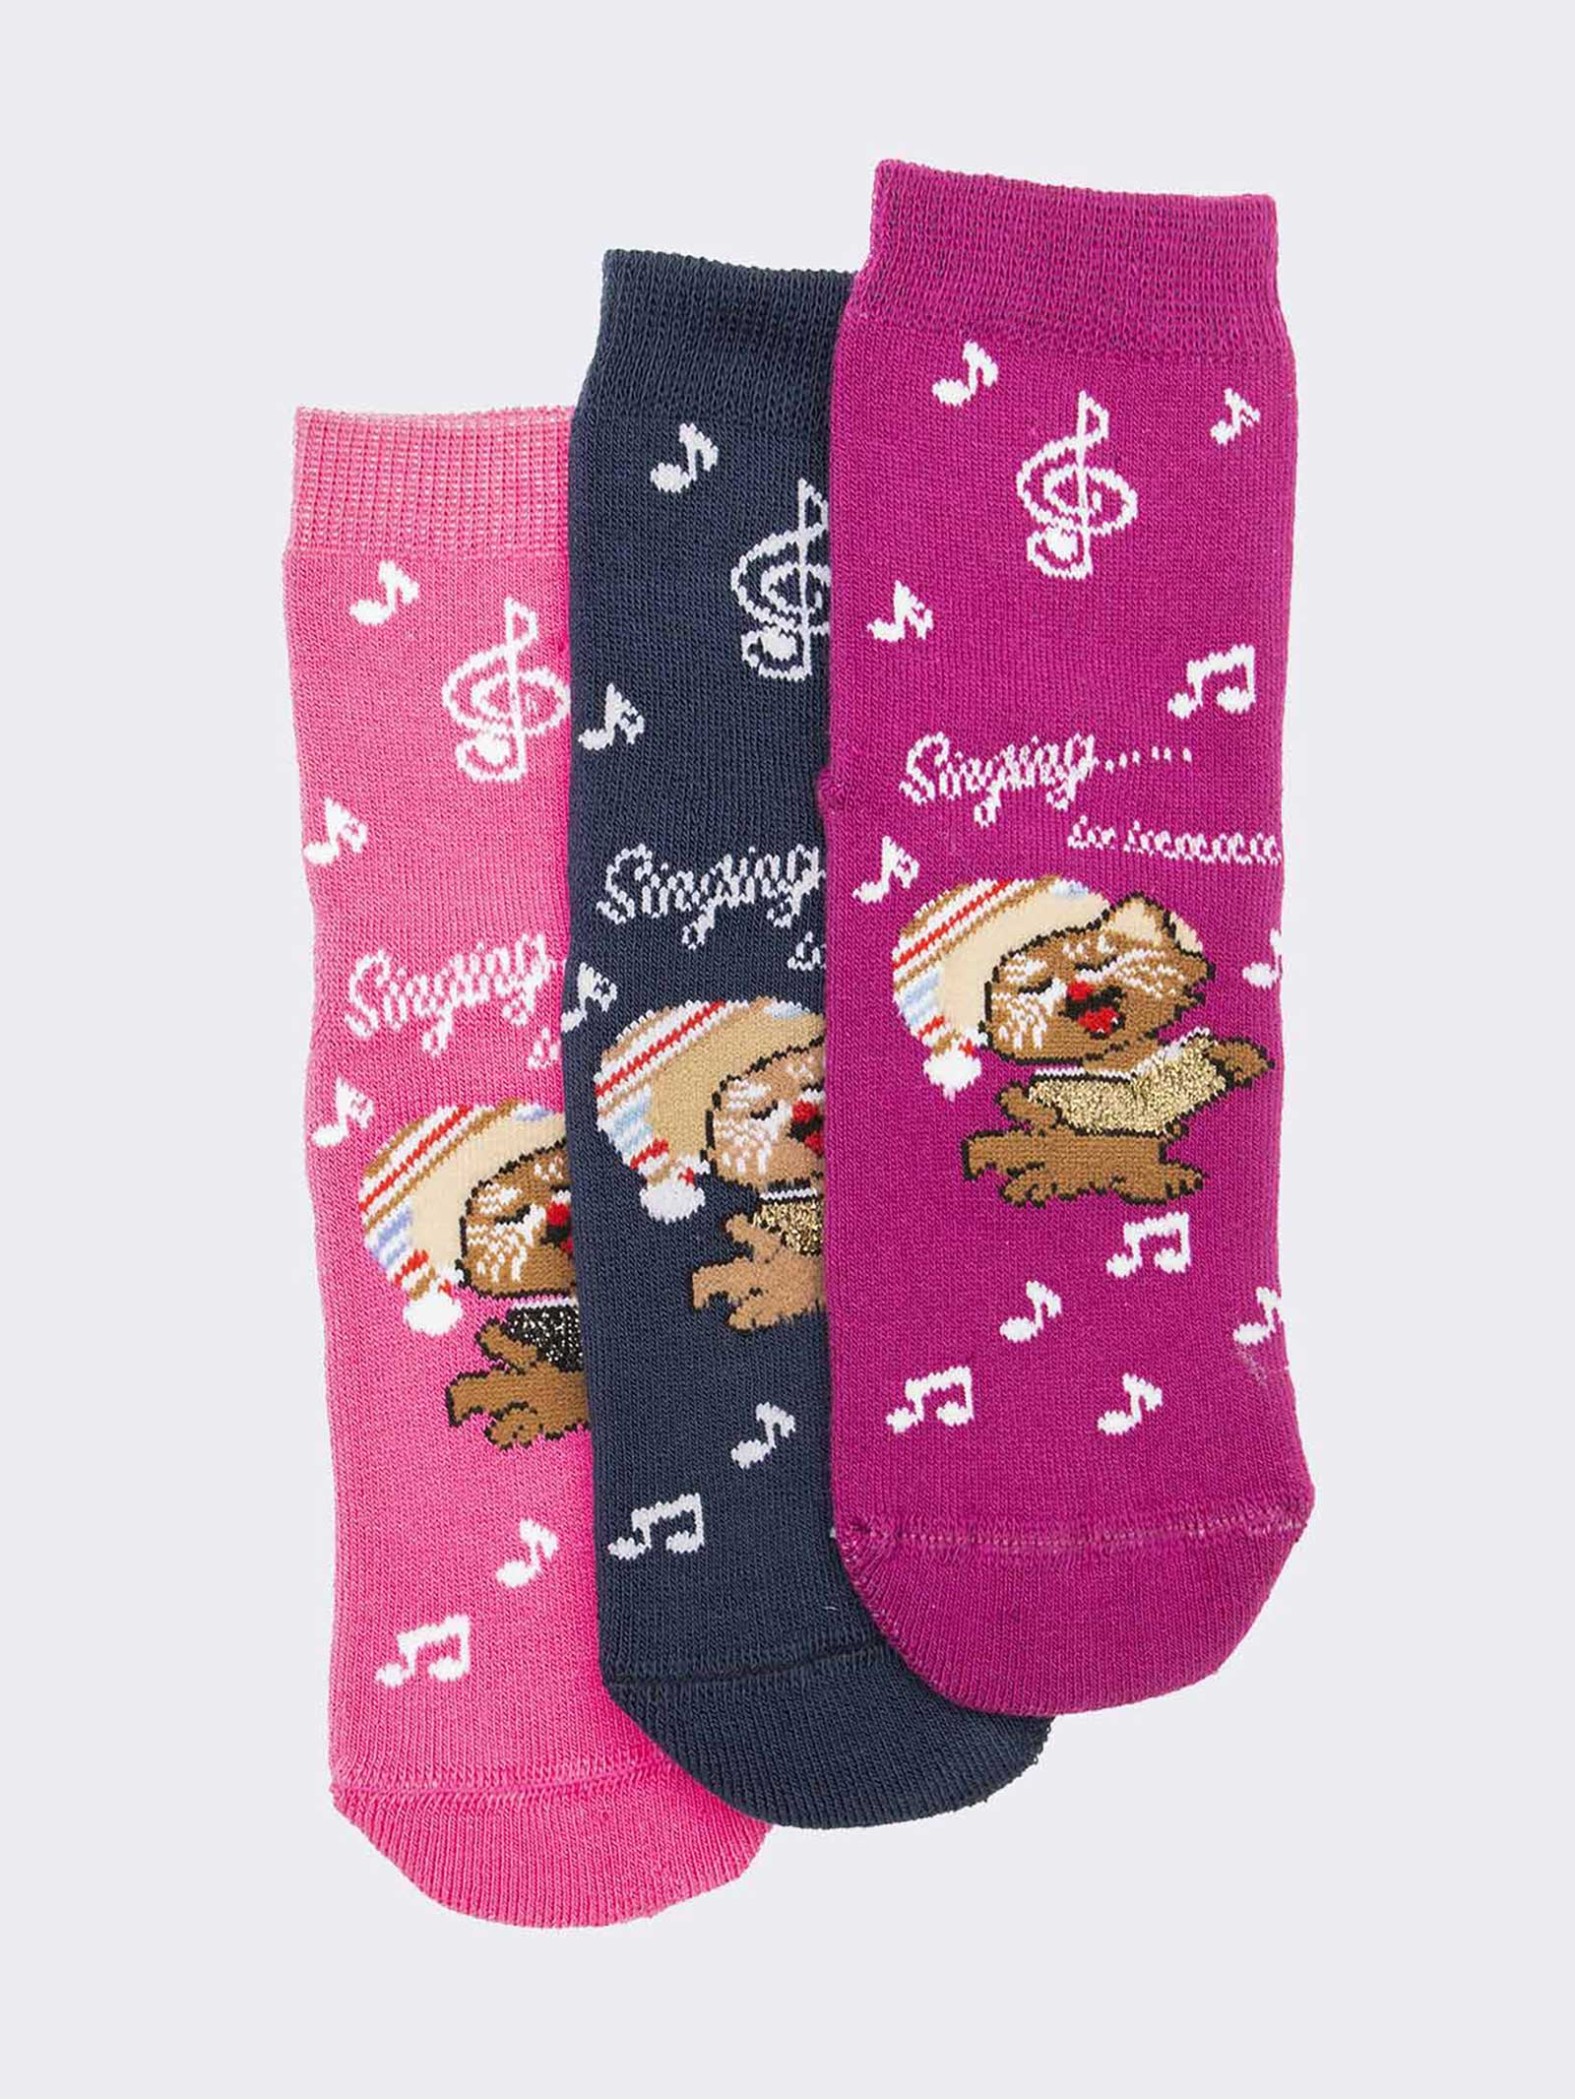 Trio of girl's anti-slip socks with owl pattern